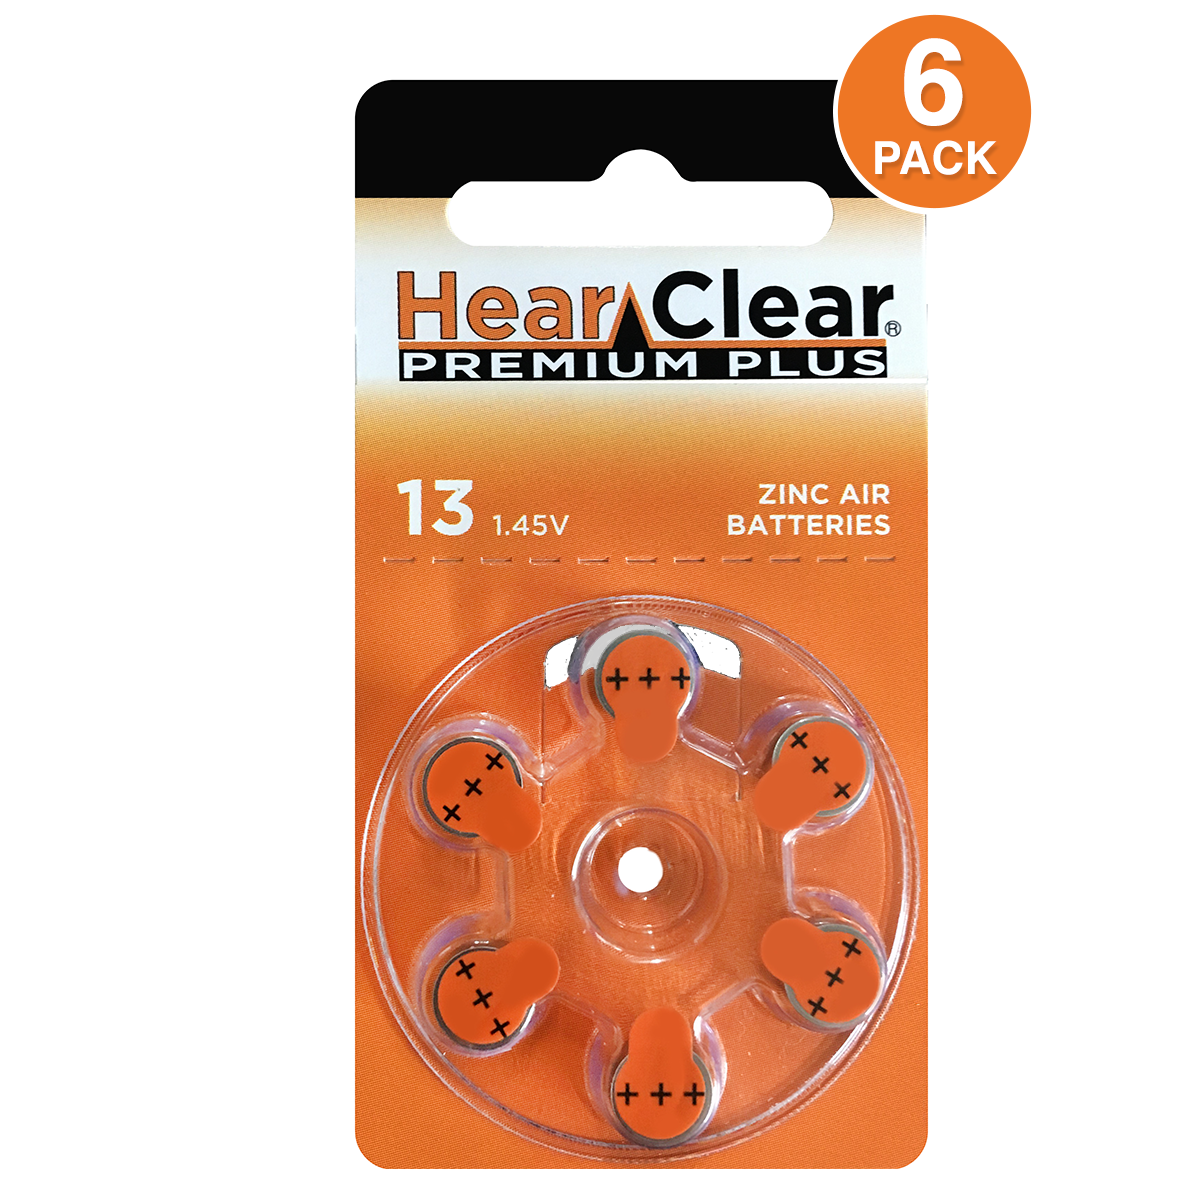 HearClear Premium Plus, Size 13 Hearing Aid Battery 6pcs